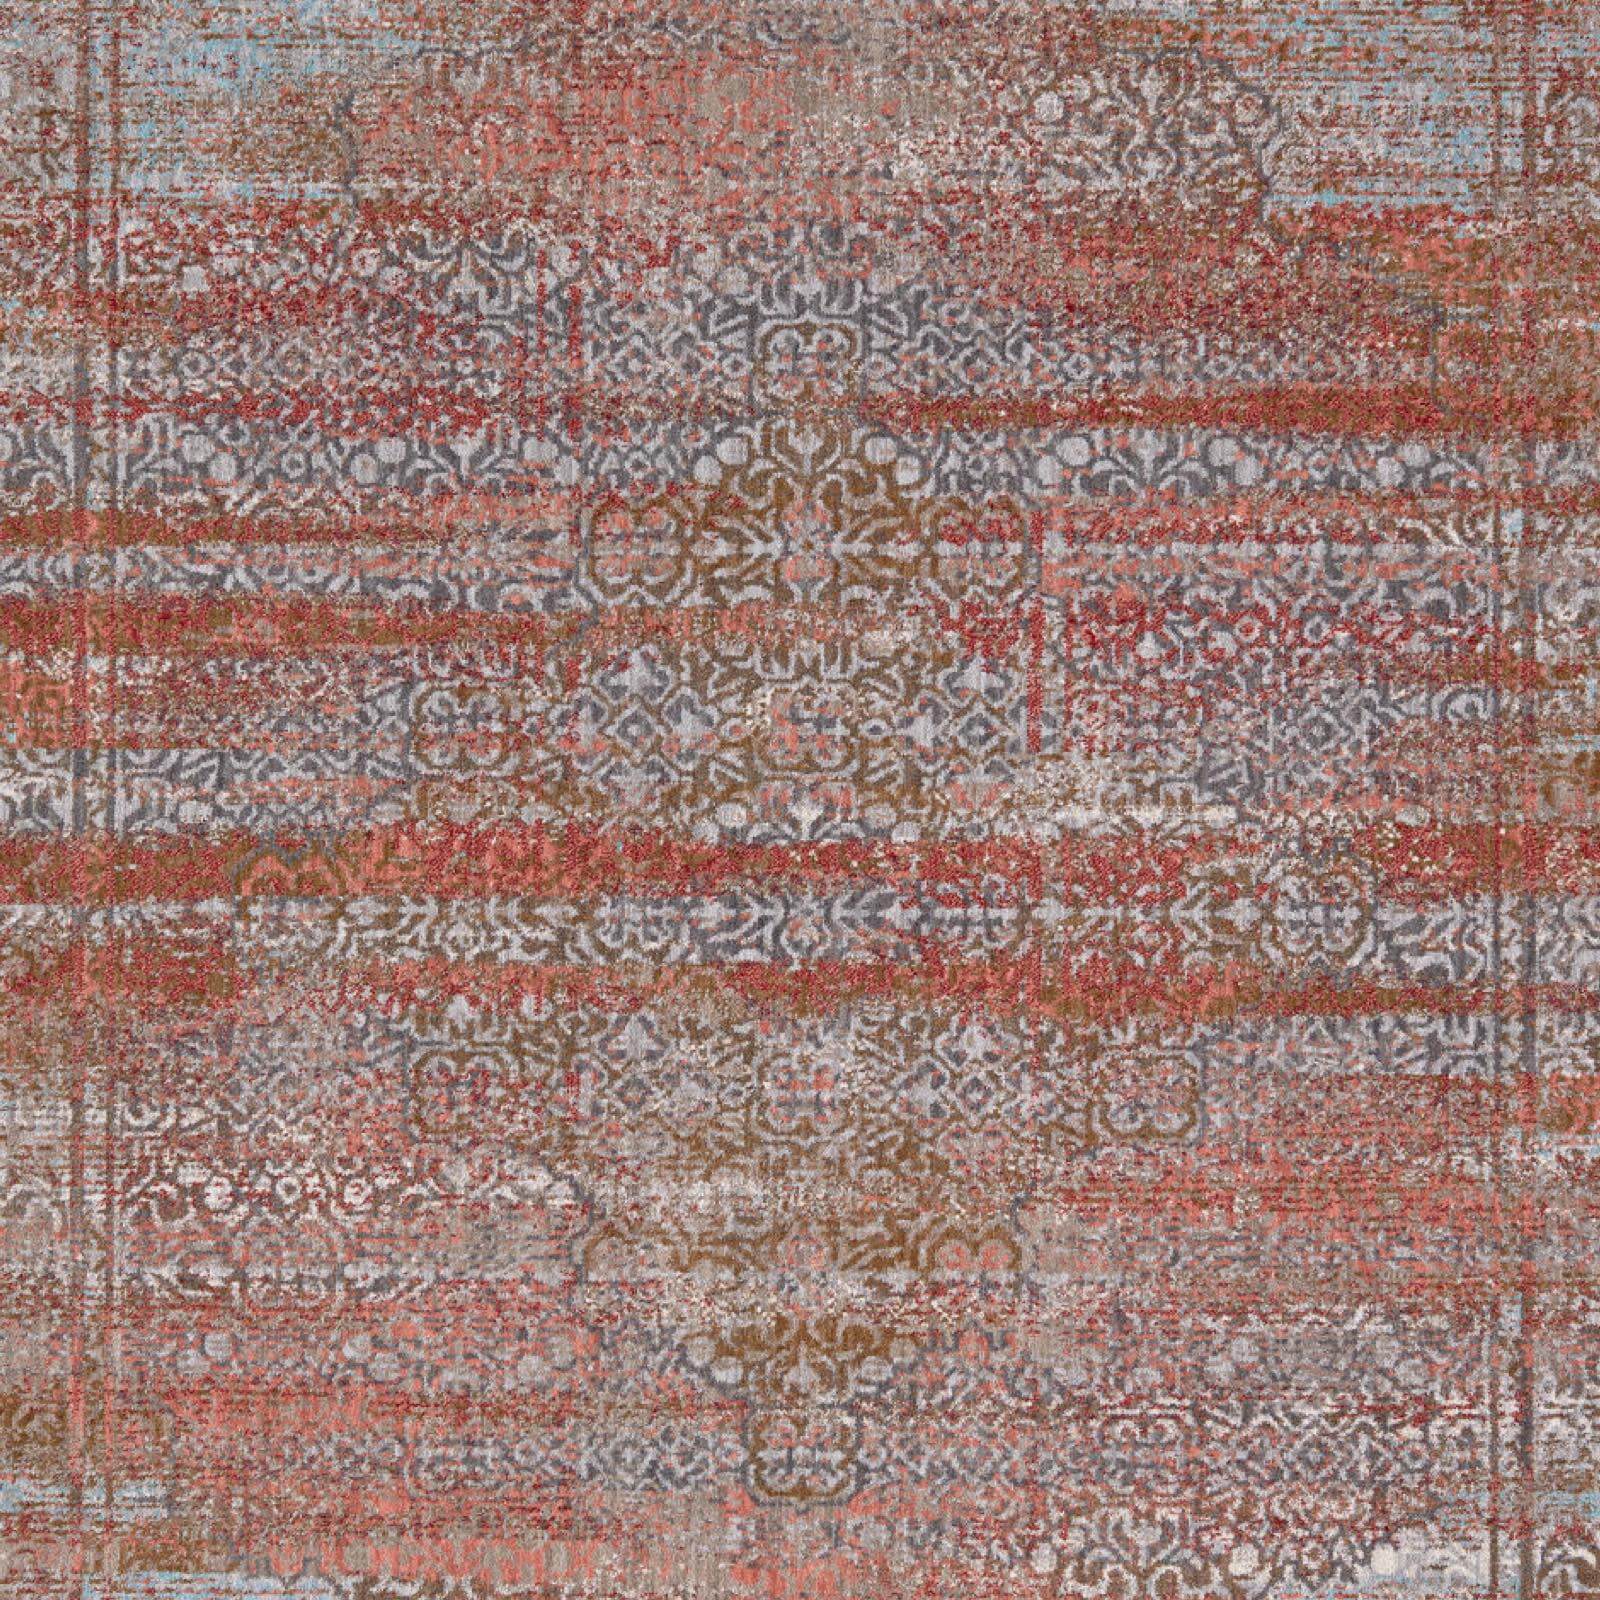 Karastan rug | Redd Flooring & Design Center